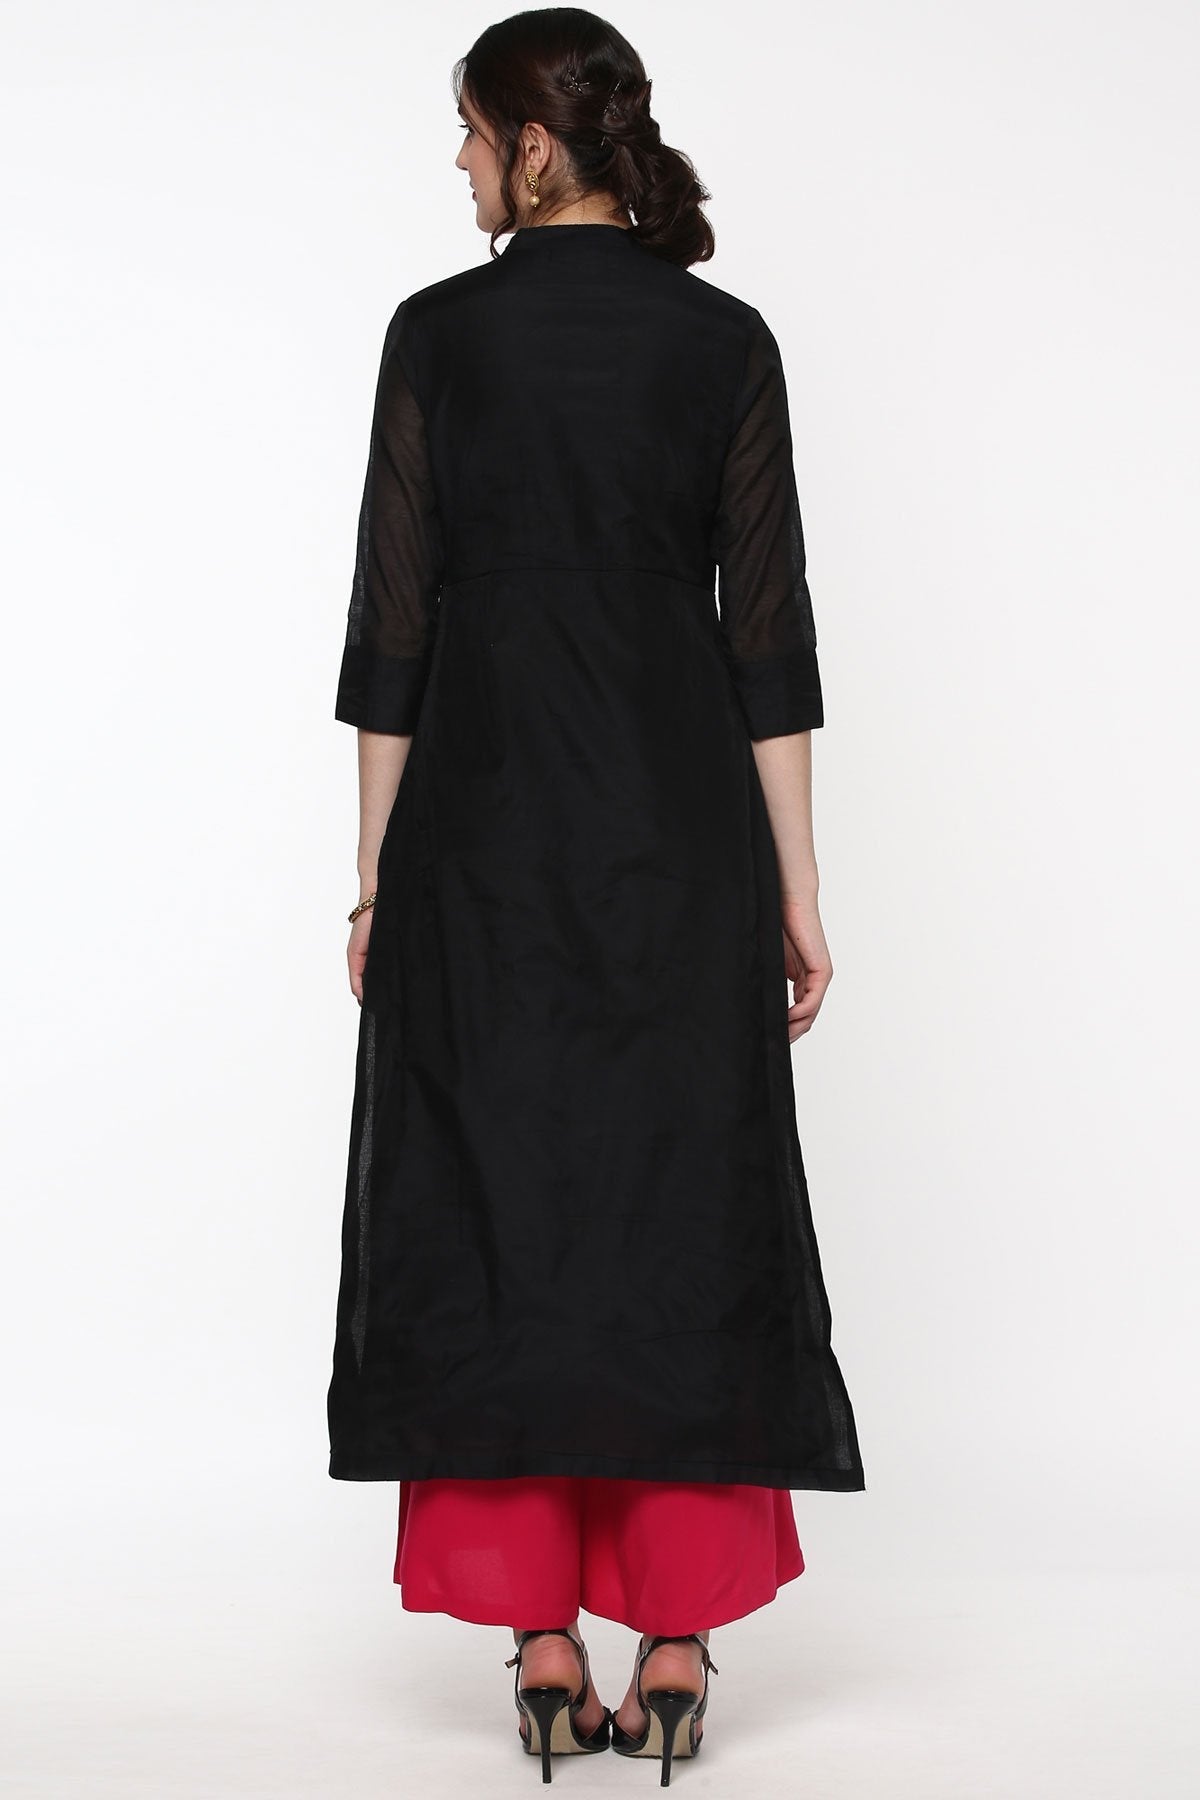 Women's Black Embroidered Front & Side Slit Kurta - SHAE